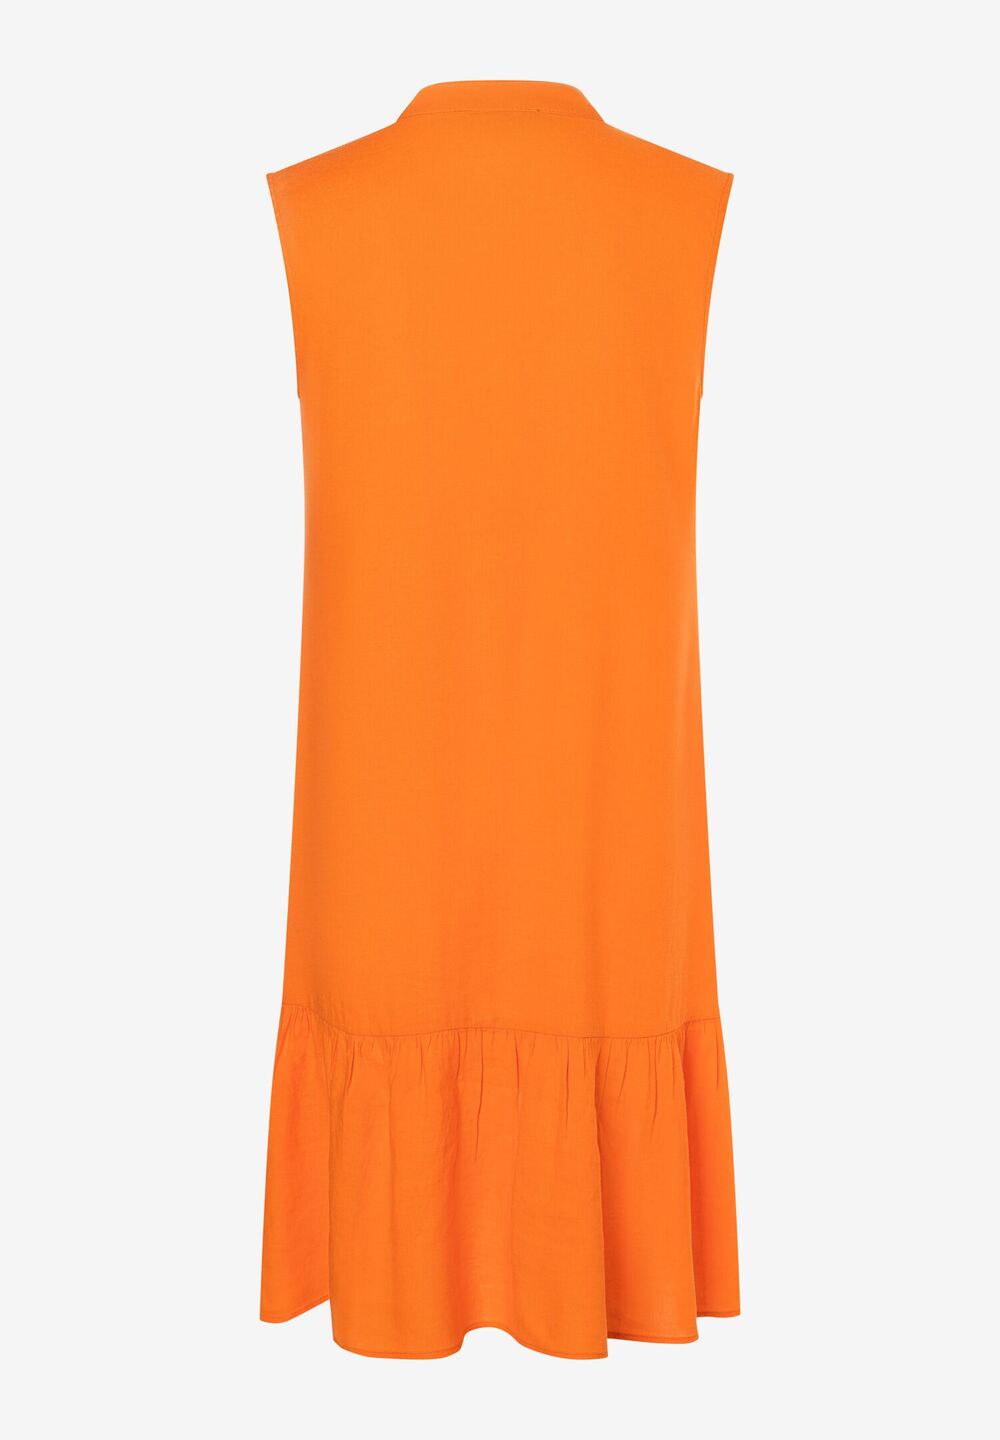 Leinen/Viskose Kleid, fresh orange, Sommer-Kollektion, orange